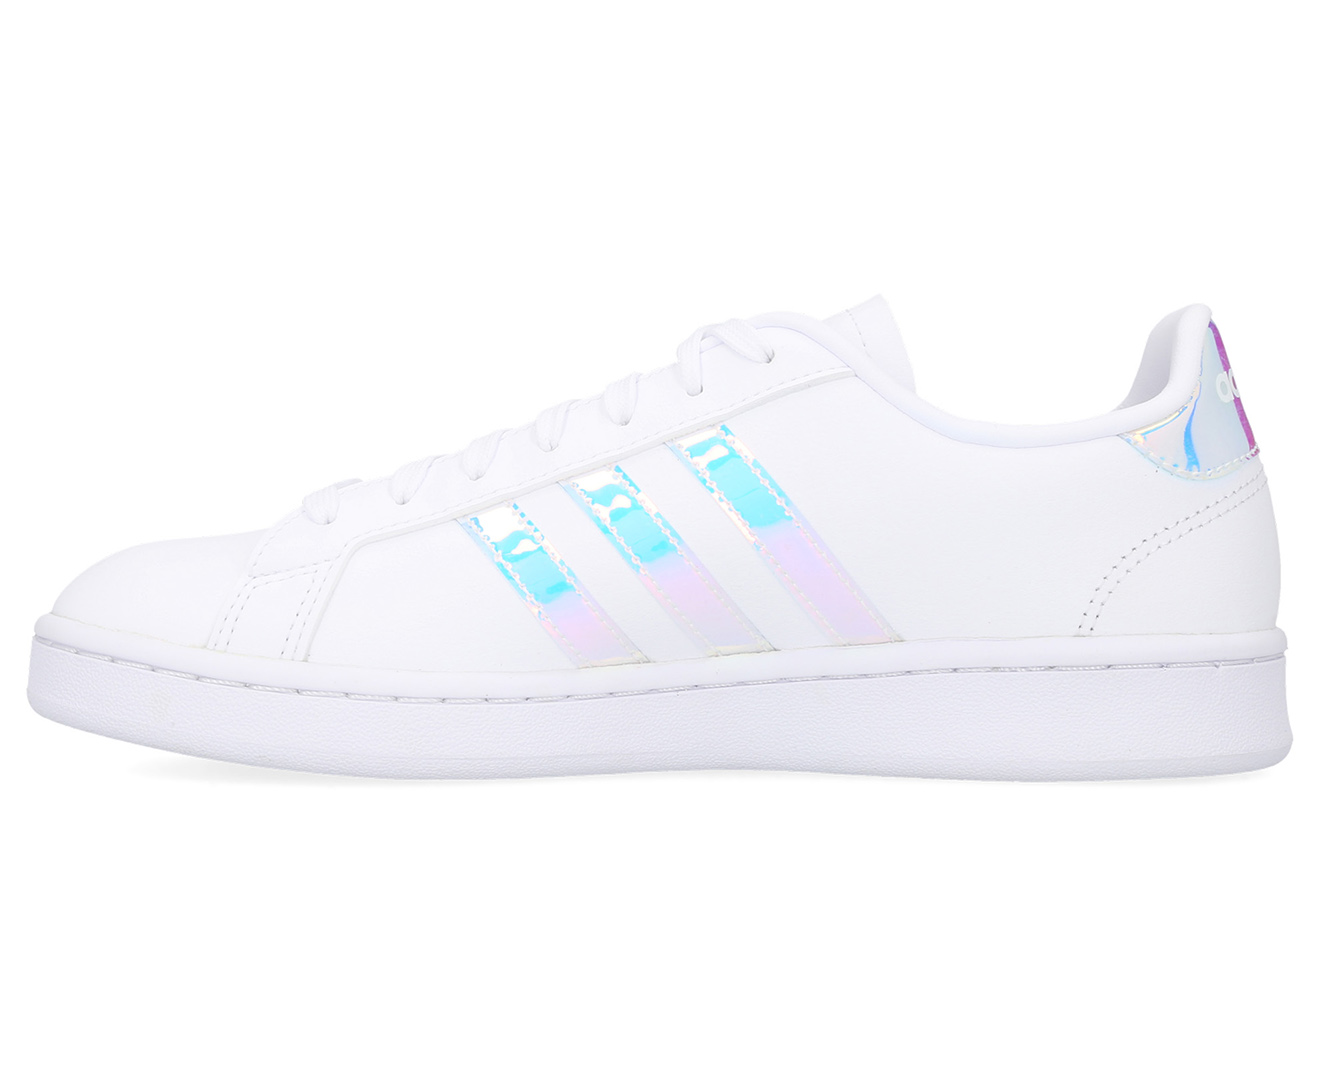 Adidas Women's Grand Court Sneakers - White/Silver Metallic | Catch.com.au